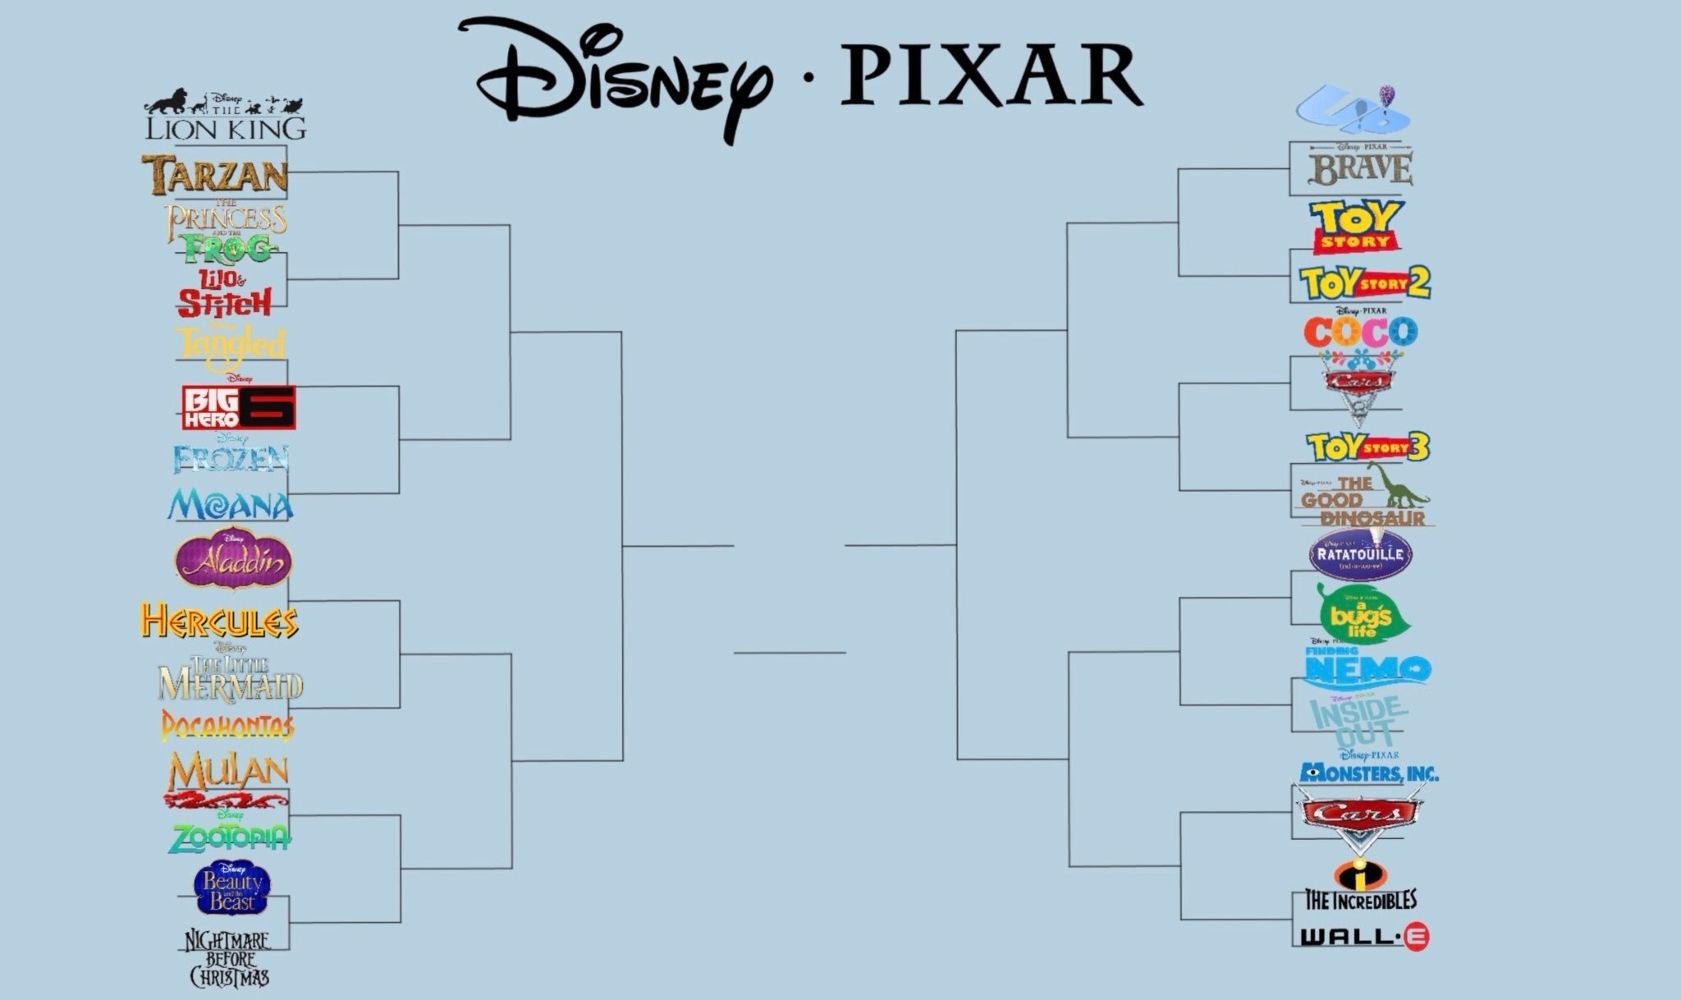 The Best Disney/Pixar Movie Bracket